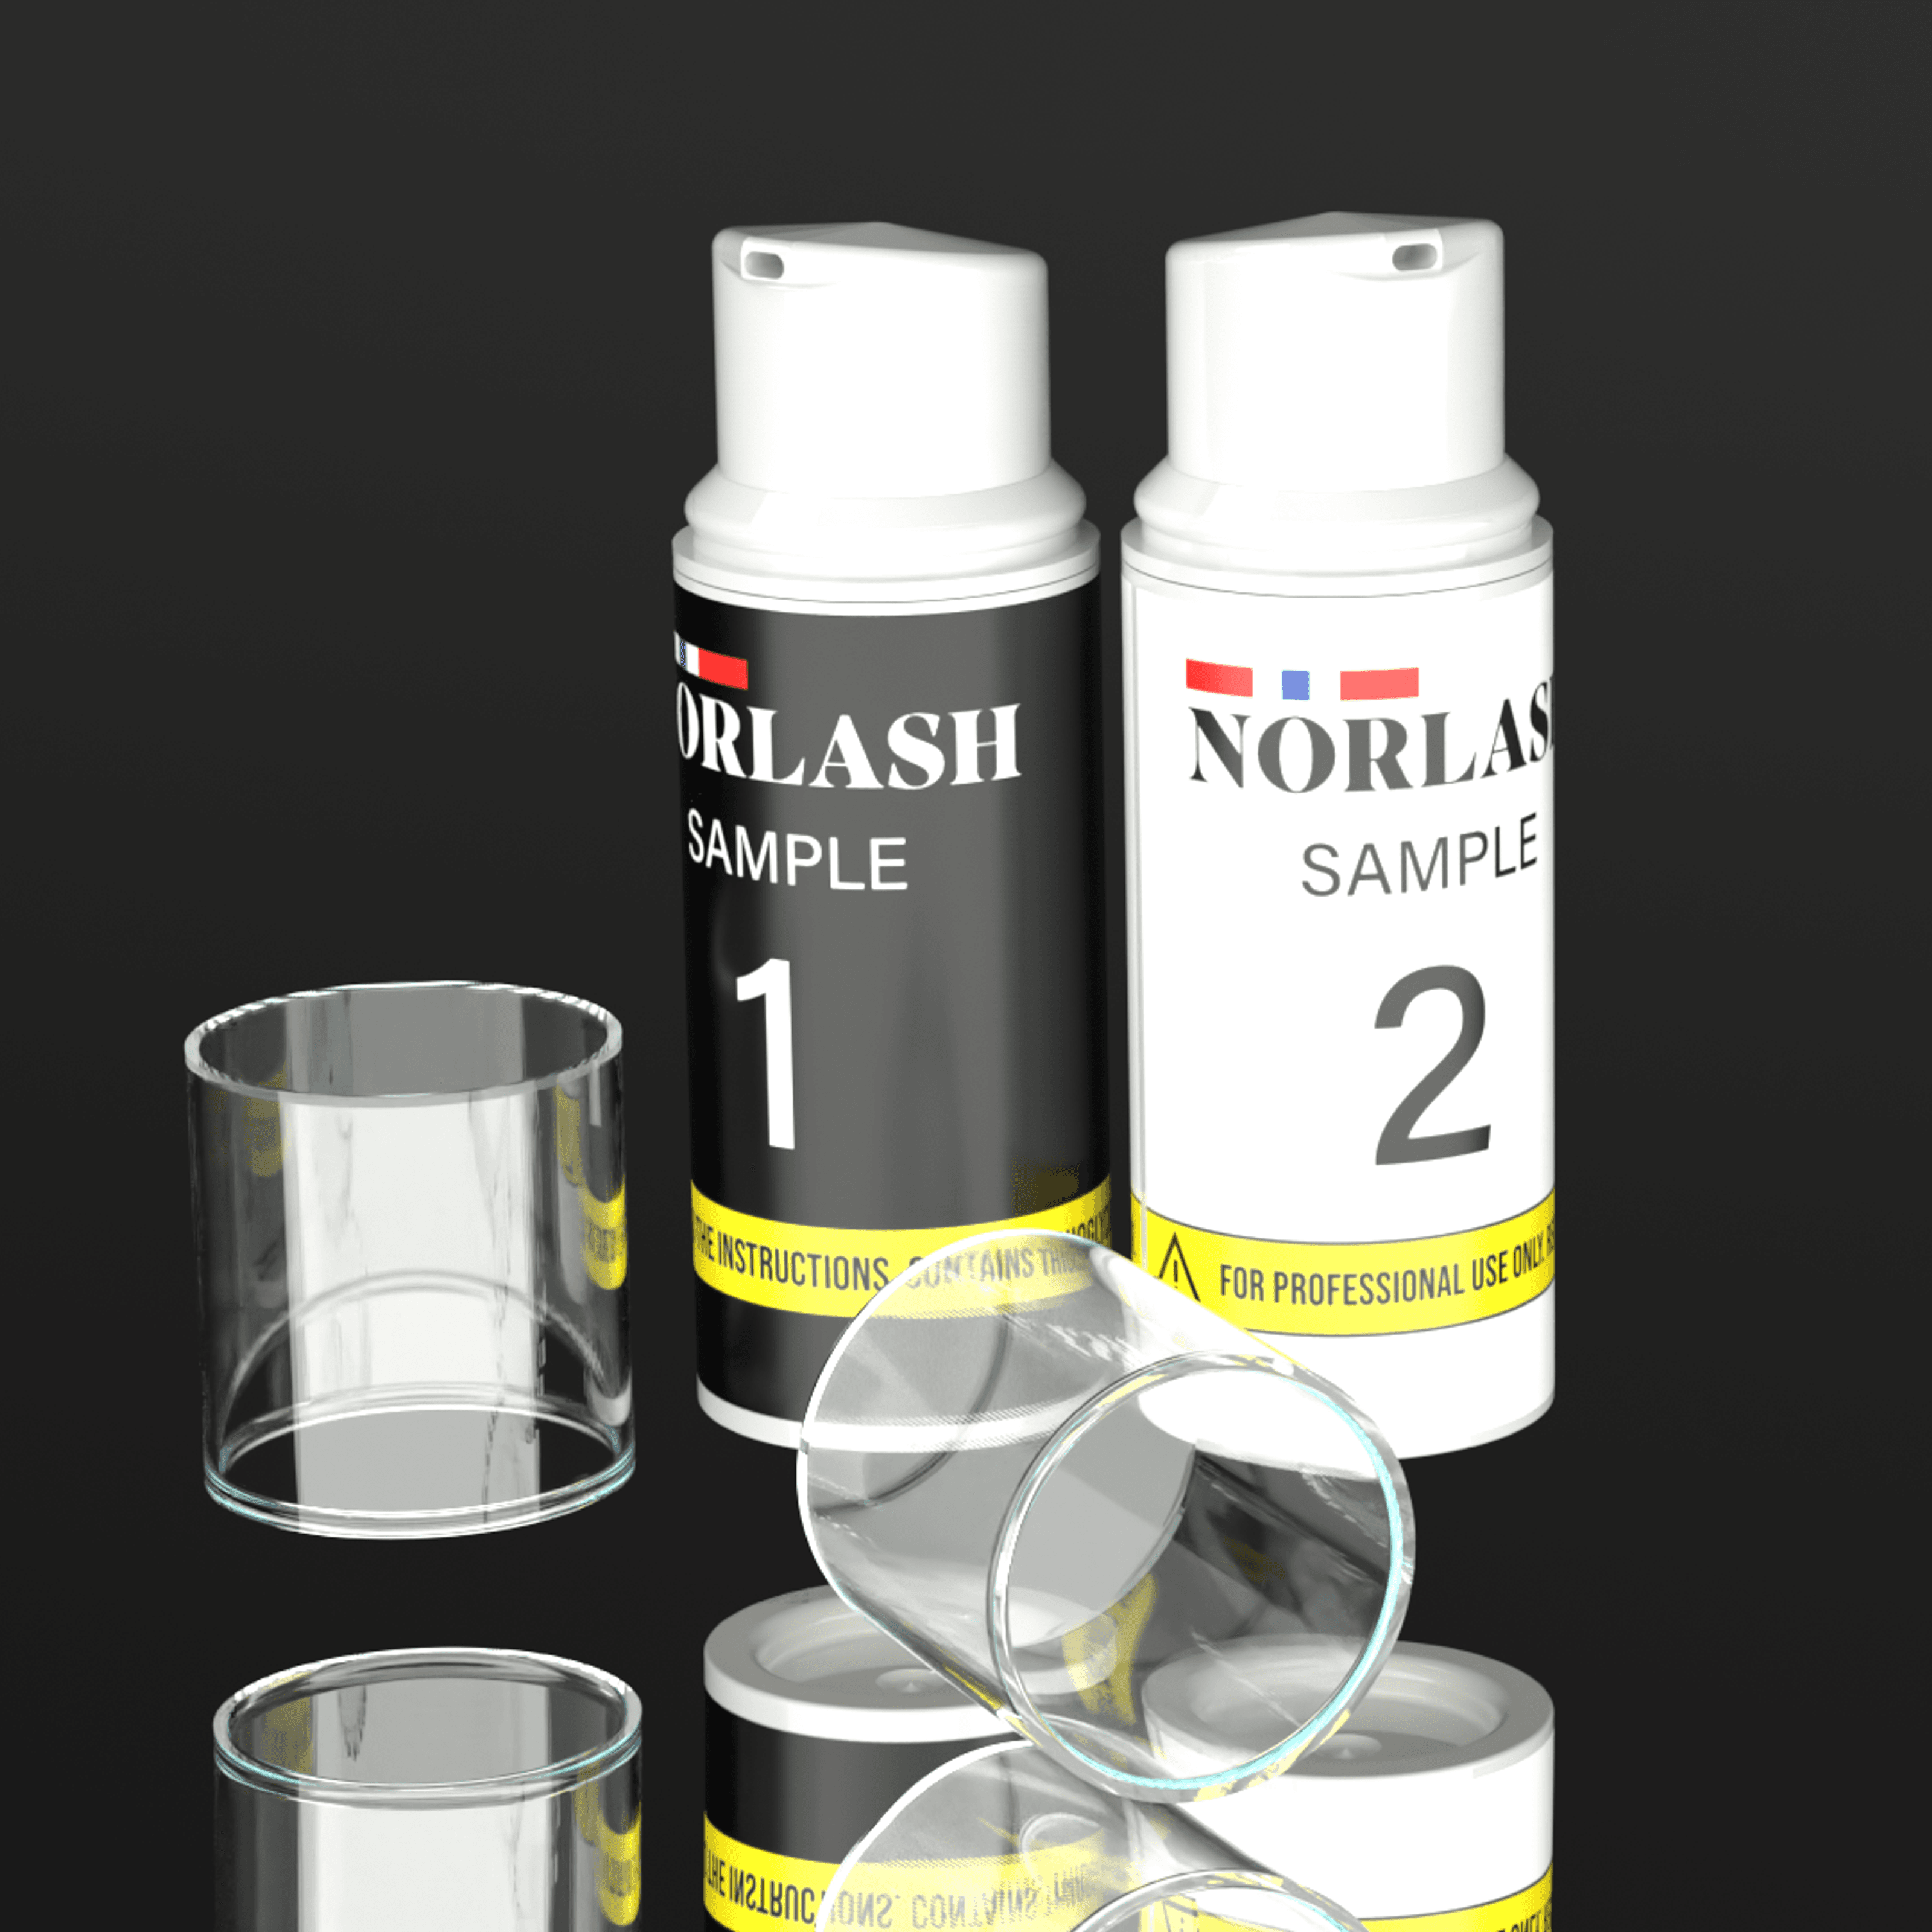 Two bottles of NORLASH sample lotion bottles on a black reflective background